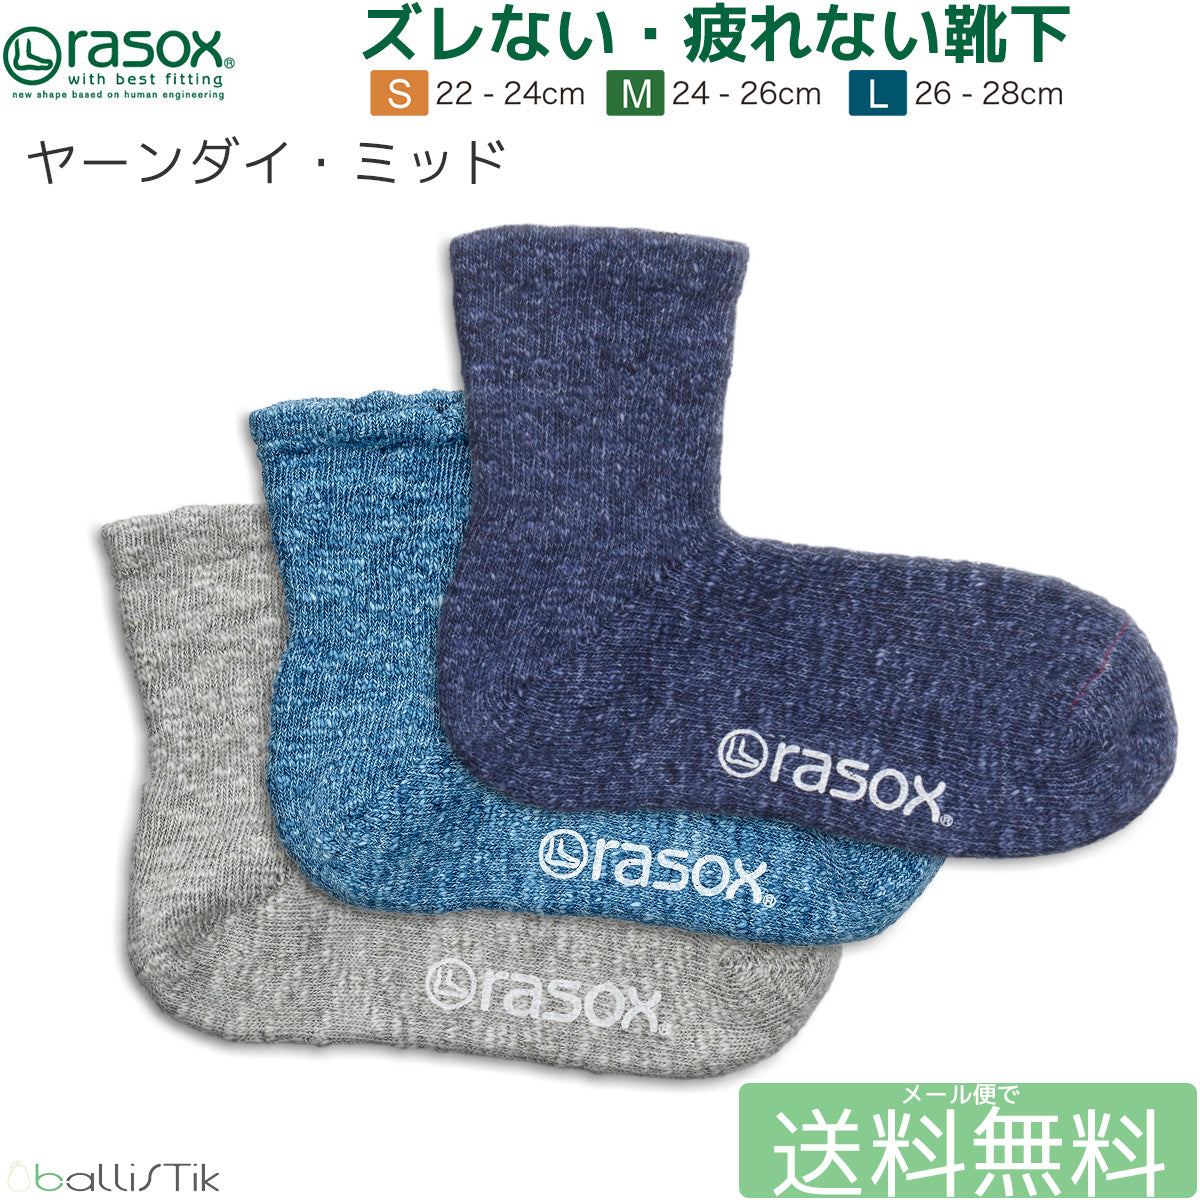 rasox/ラソックス/靴下/スニーカーソックス/ショートソックス/ロークルーソックス/ヤーンダイミッド